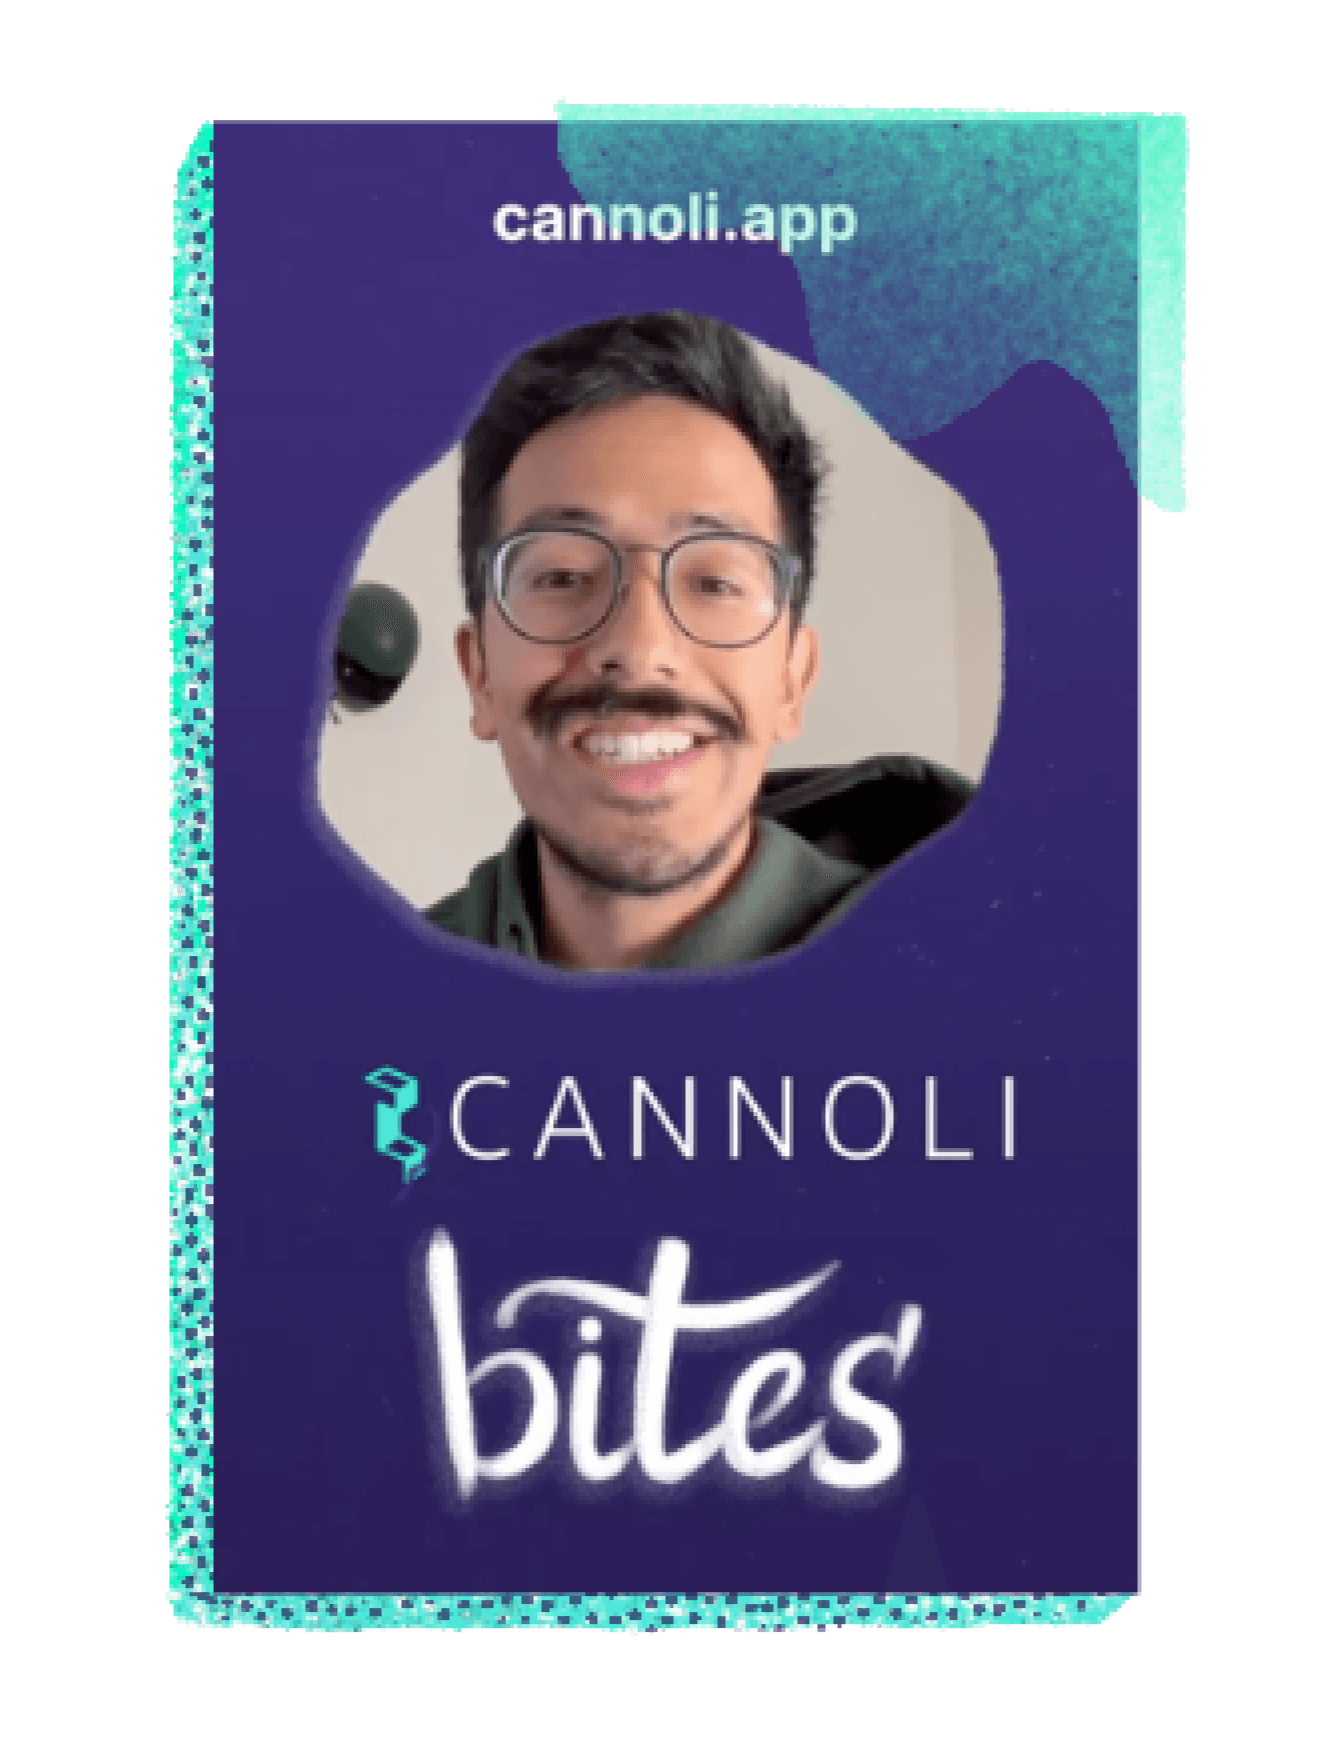 Cannoli bites